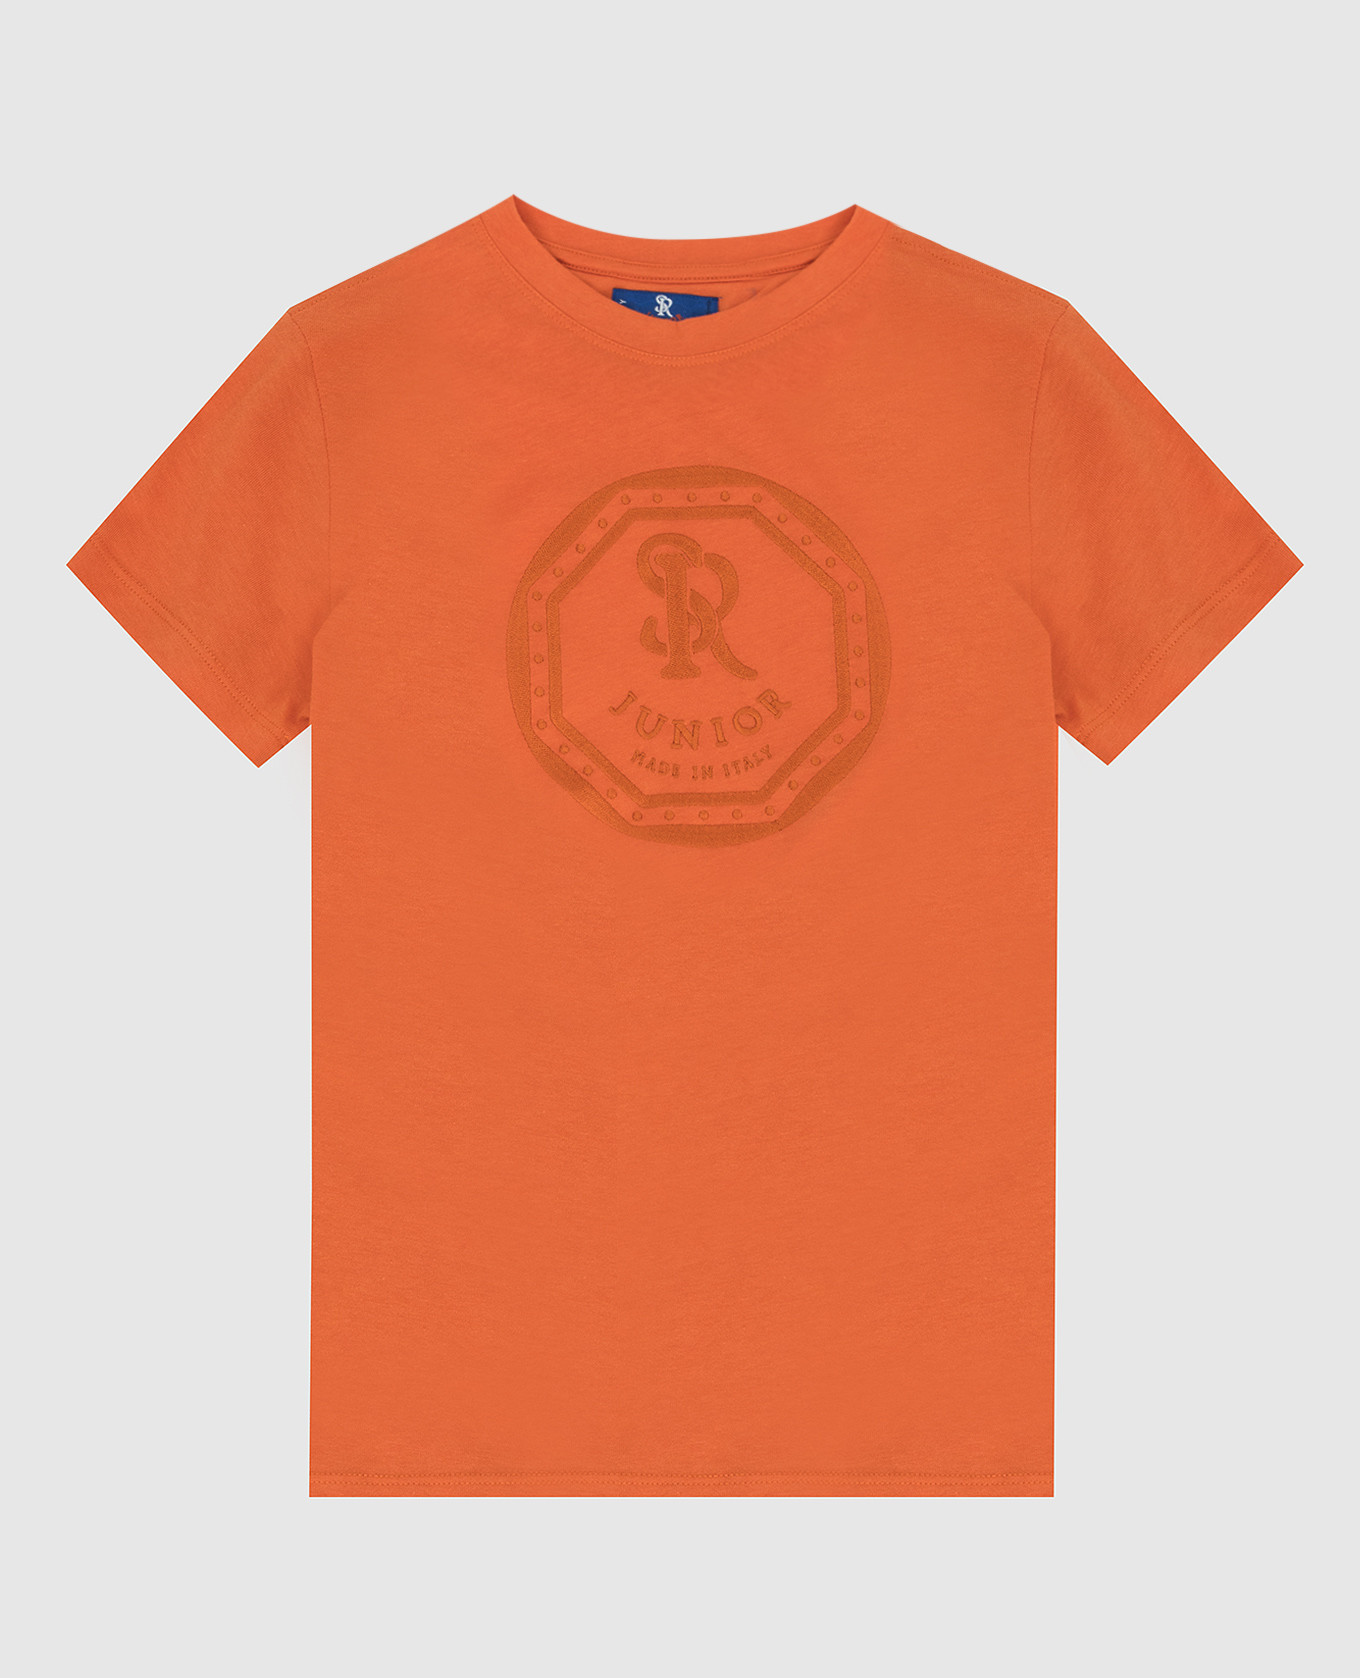 Дитяча помаранчева футболка з вишивкою емблеми